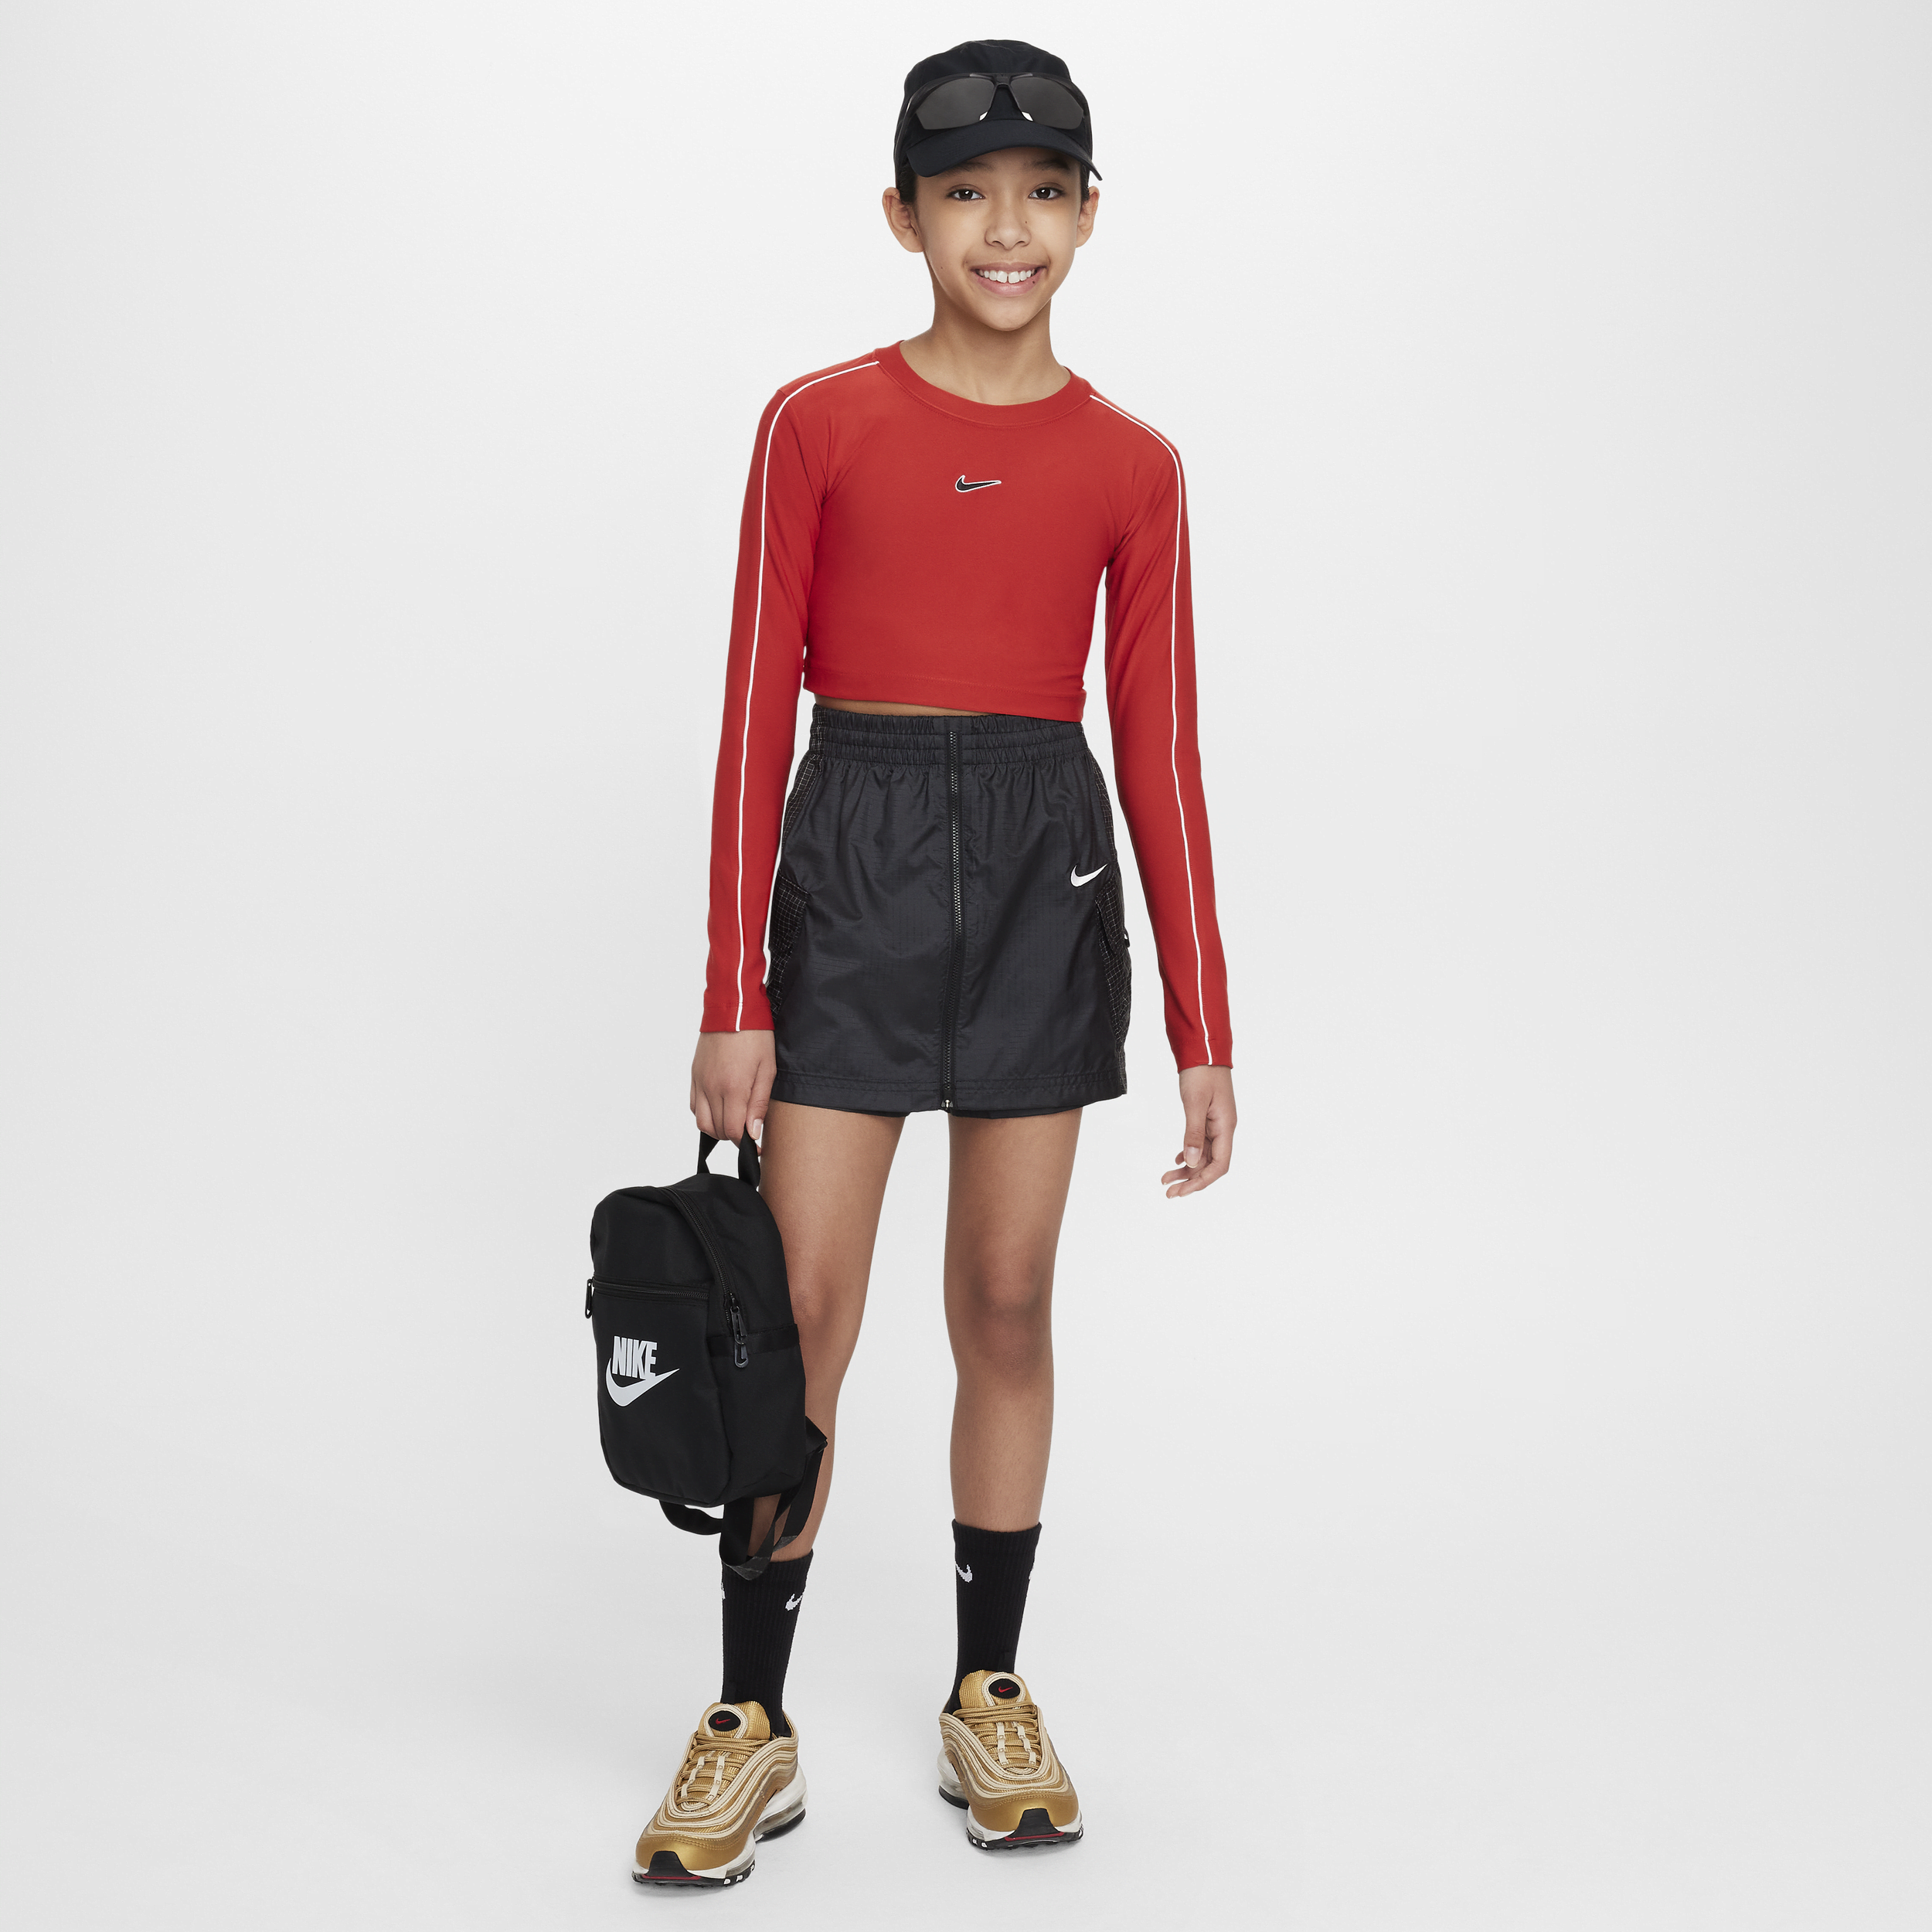 Nike Sportswear croptop met lange mouwen voor meisjes Rood